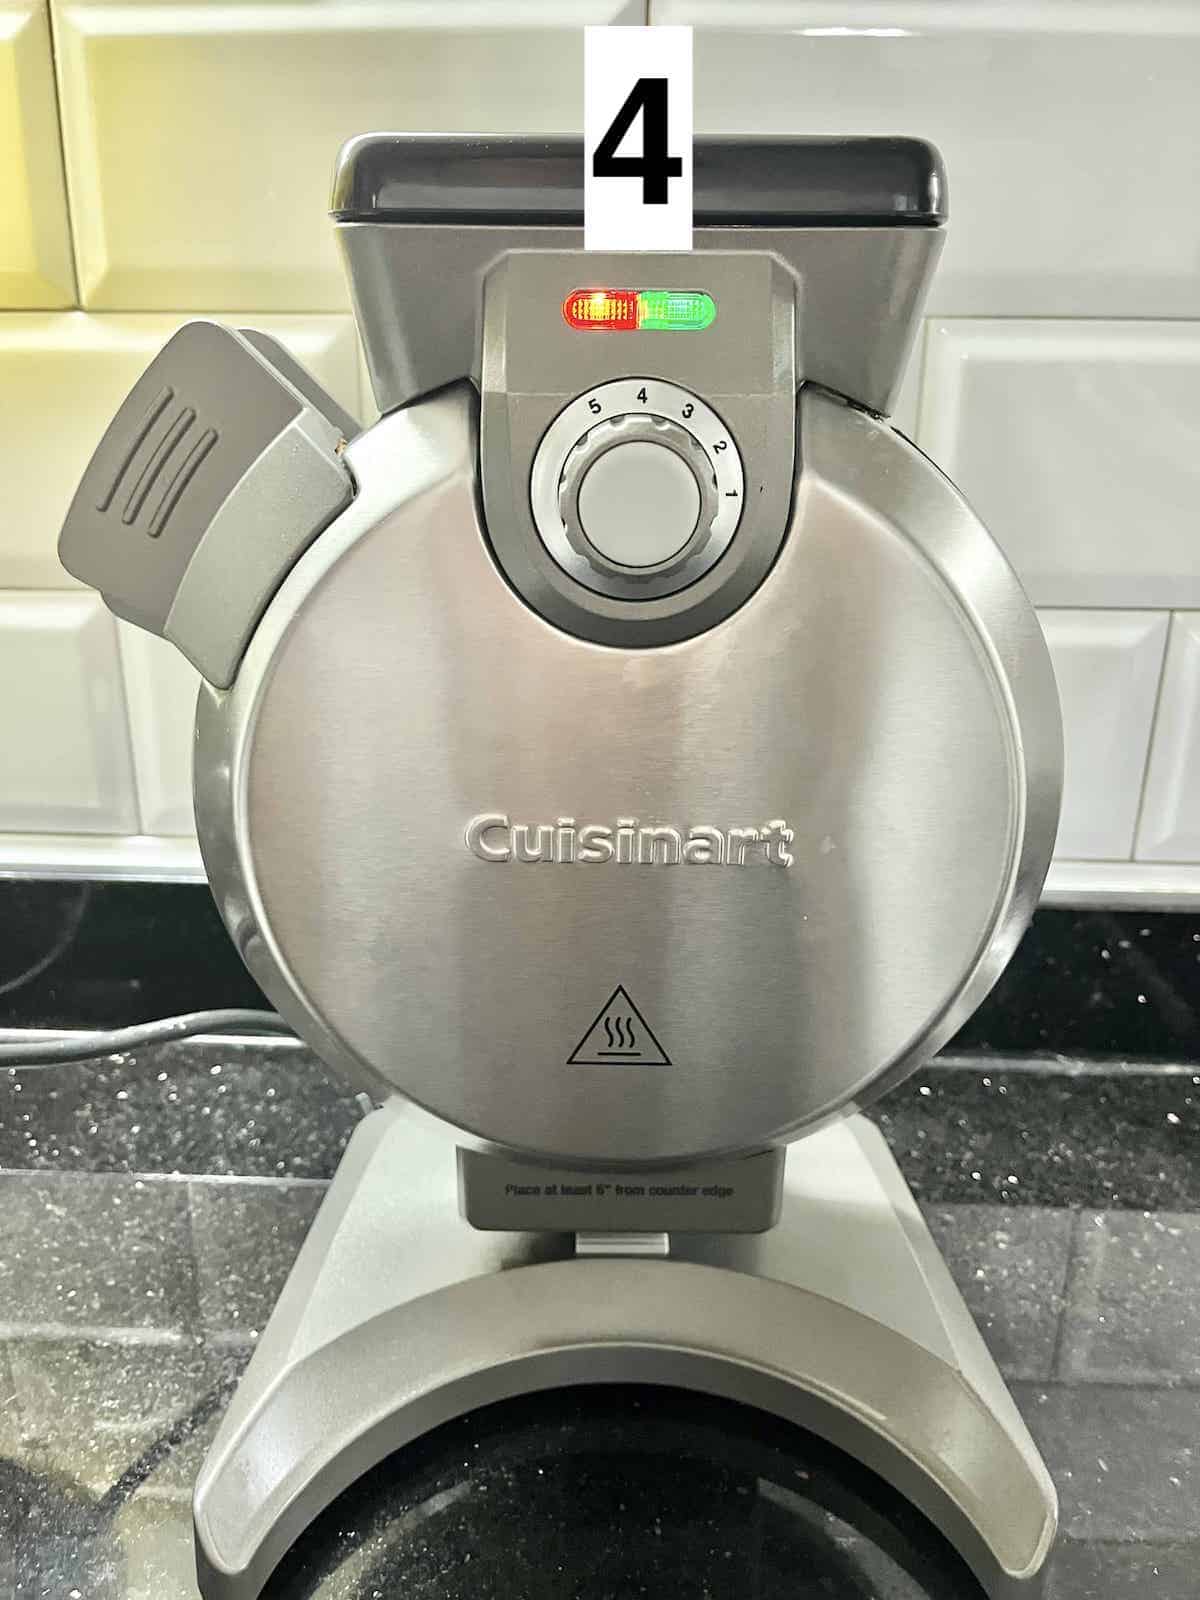 Cuisinart vertical waffle machine that has pre-heated.